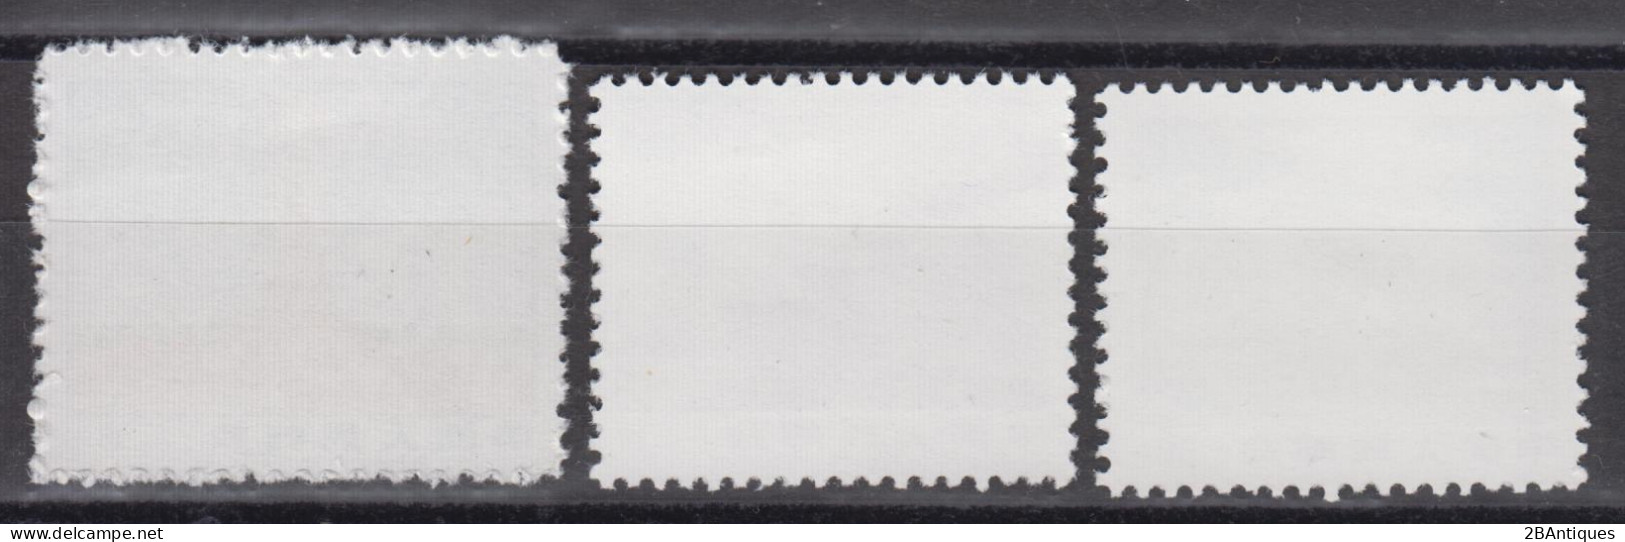 PR CHINA 1969 - Revolutionary Sites MNH** XF - Unused Stamps